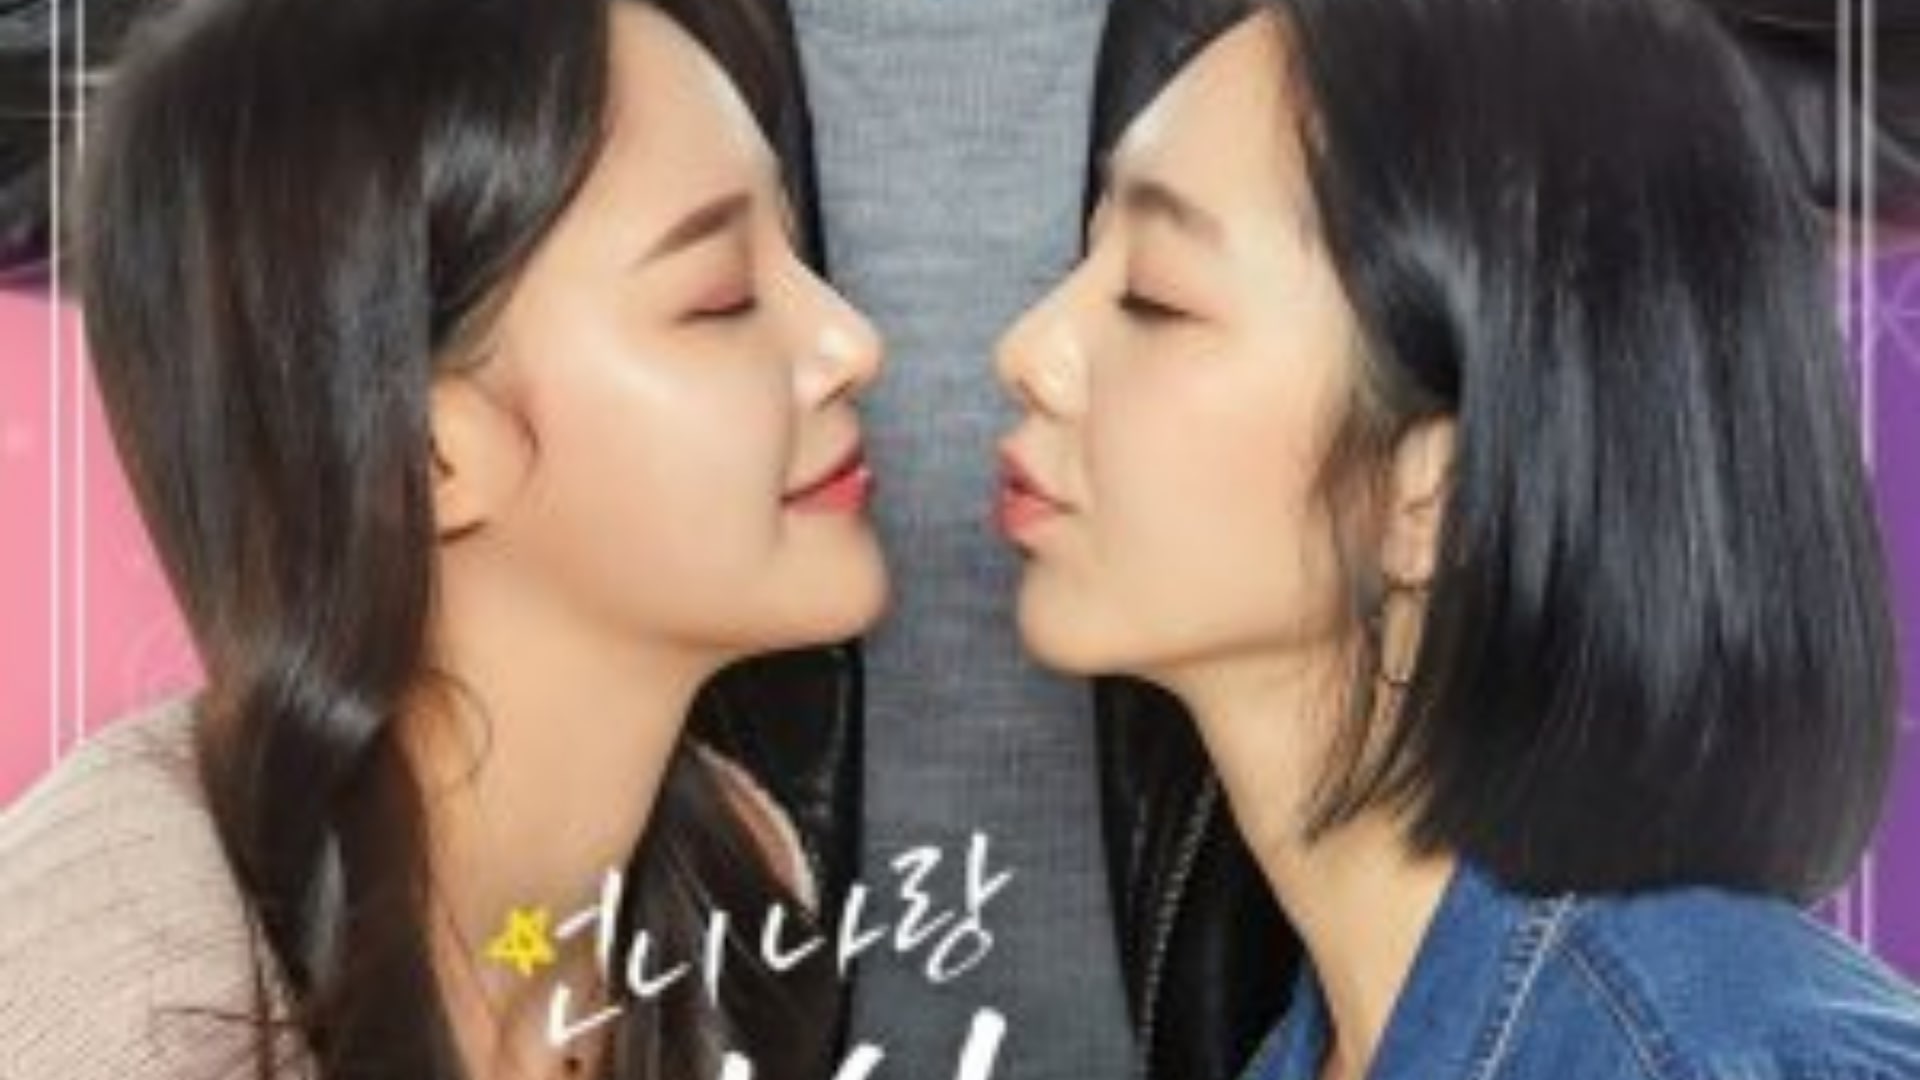 Korean Teen Lesbians